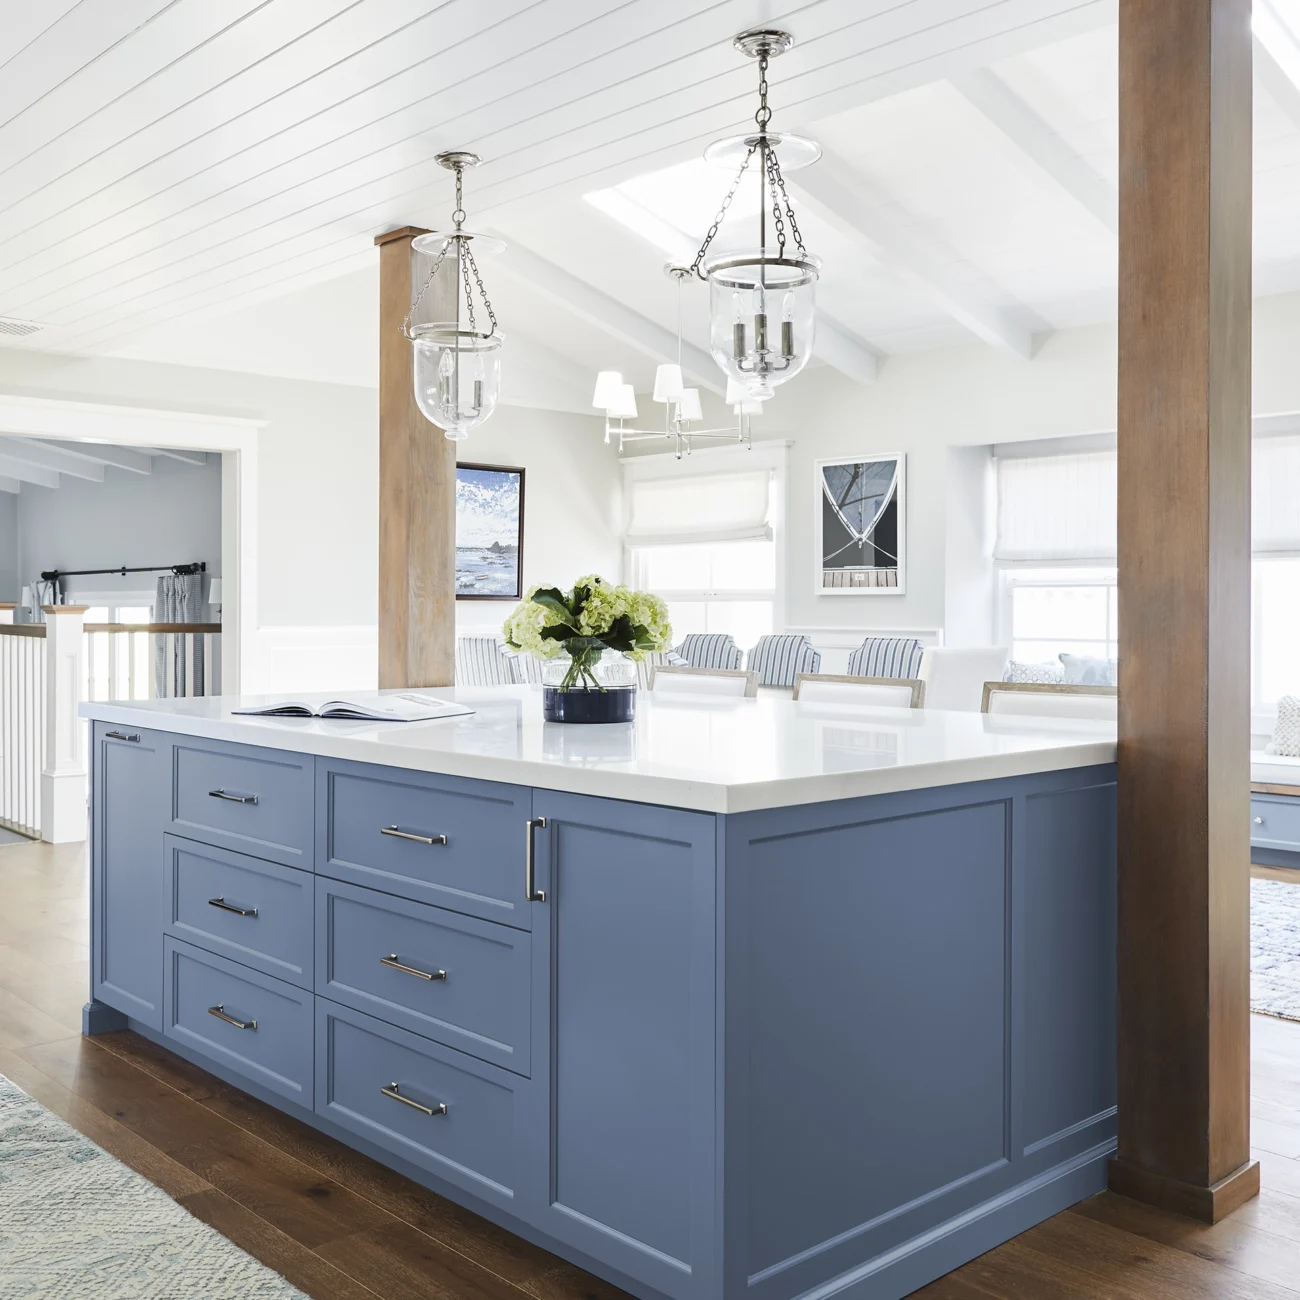 Christine Vroom Interiors | Flournoy | Costal White Kitchen with Blue Cabinets